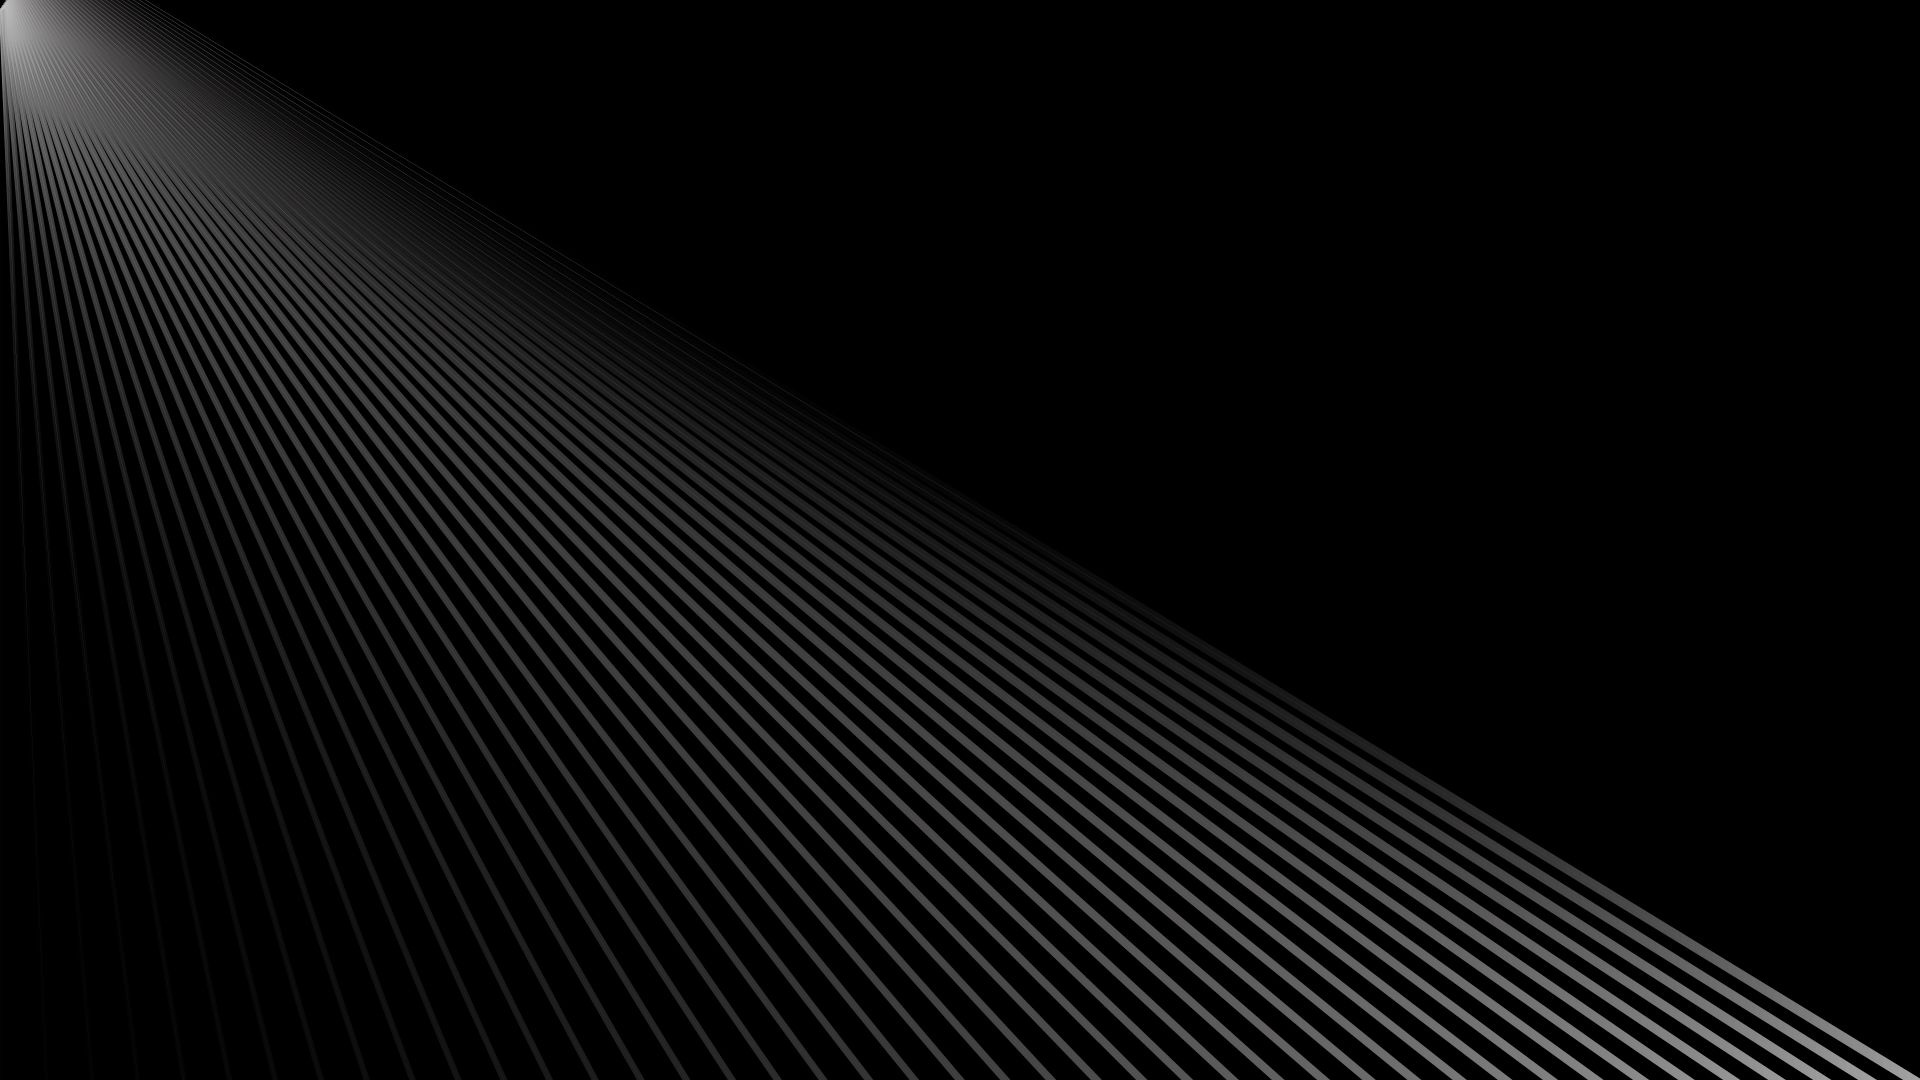 Dark lines texture wallpaper, HD image, Abstract background, Unique pattern, 1920x1080 Full HD Desktop